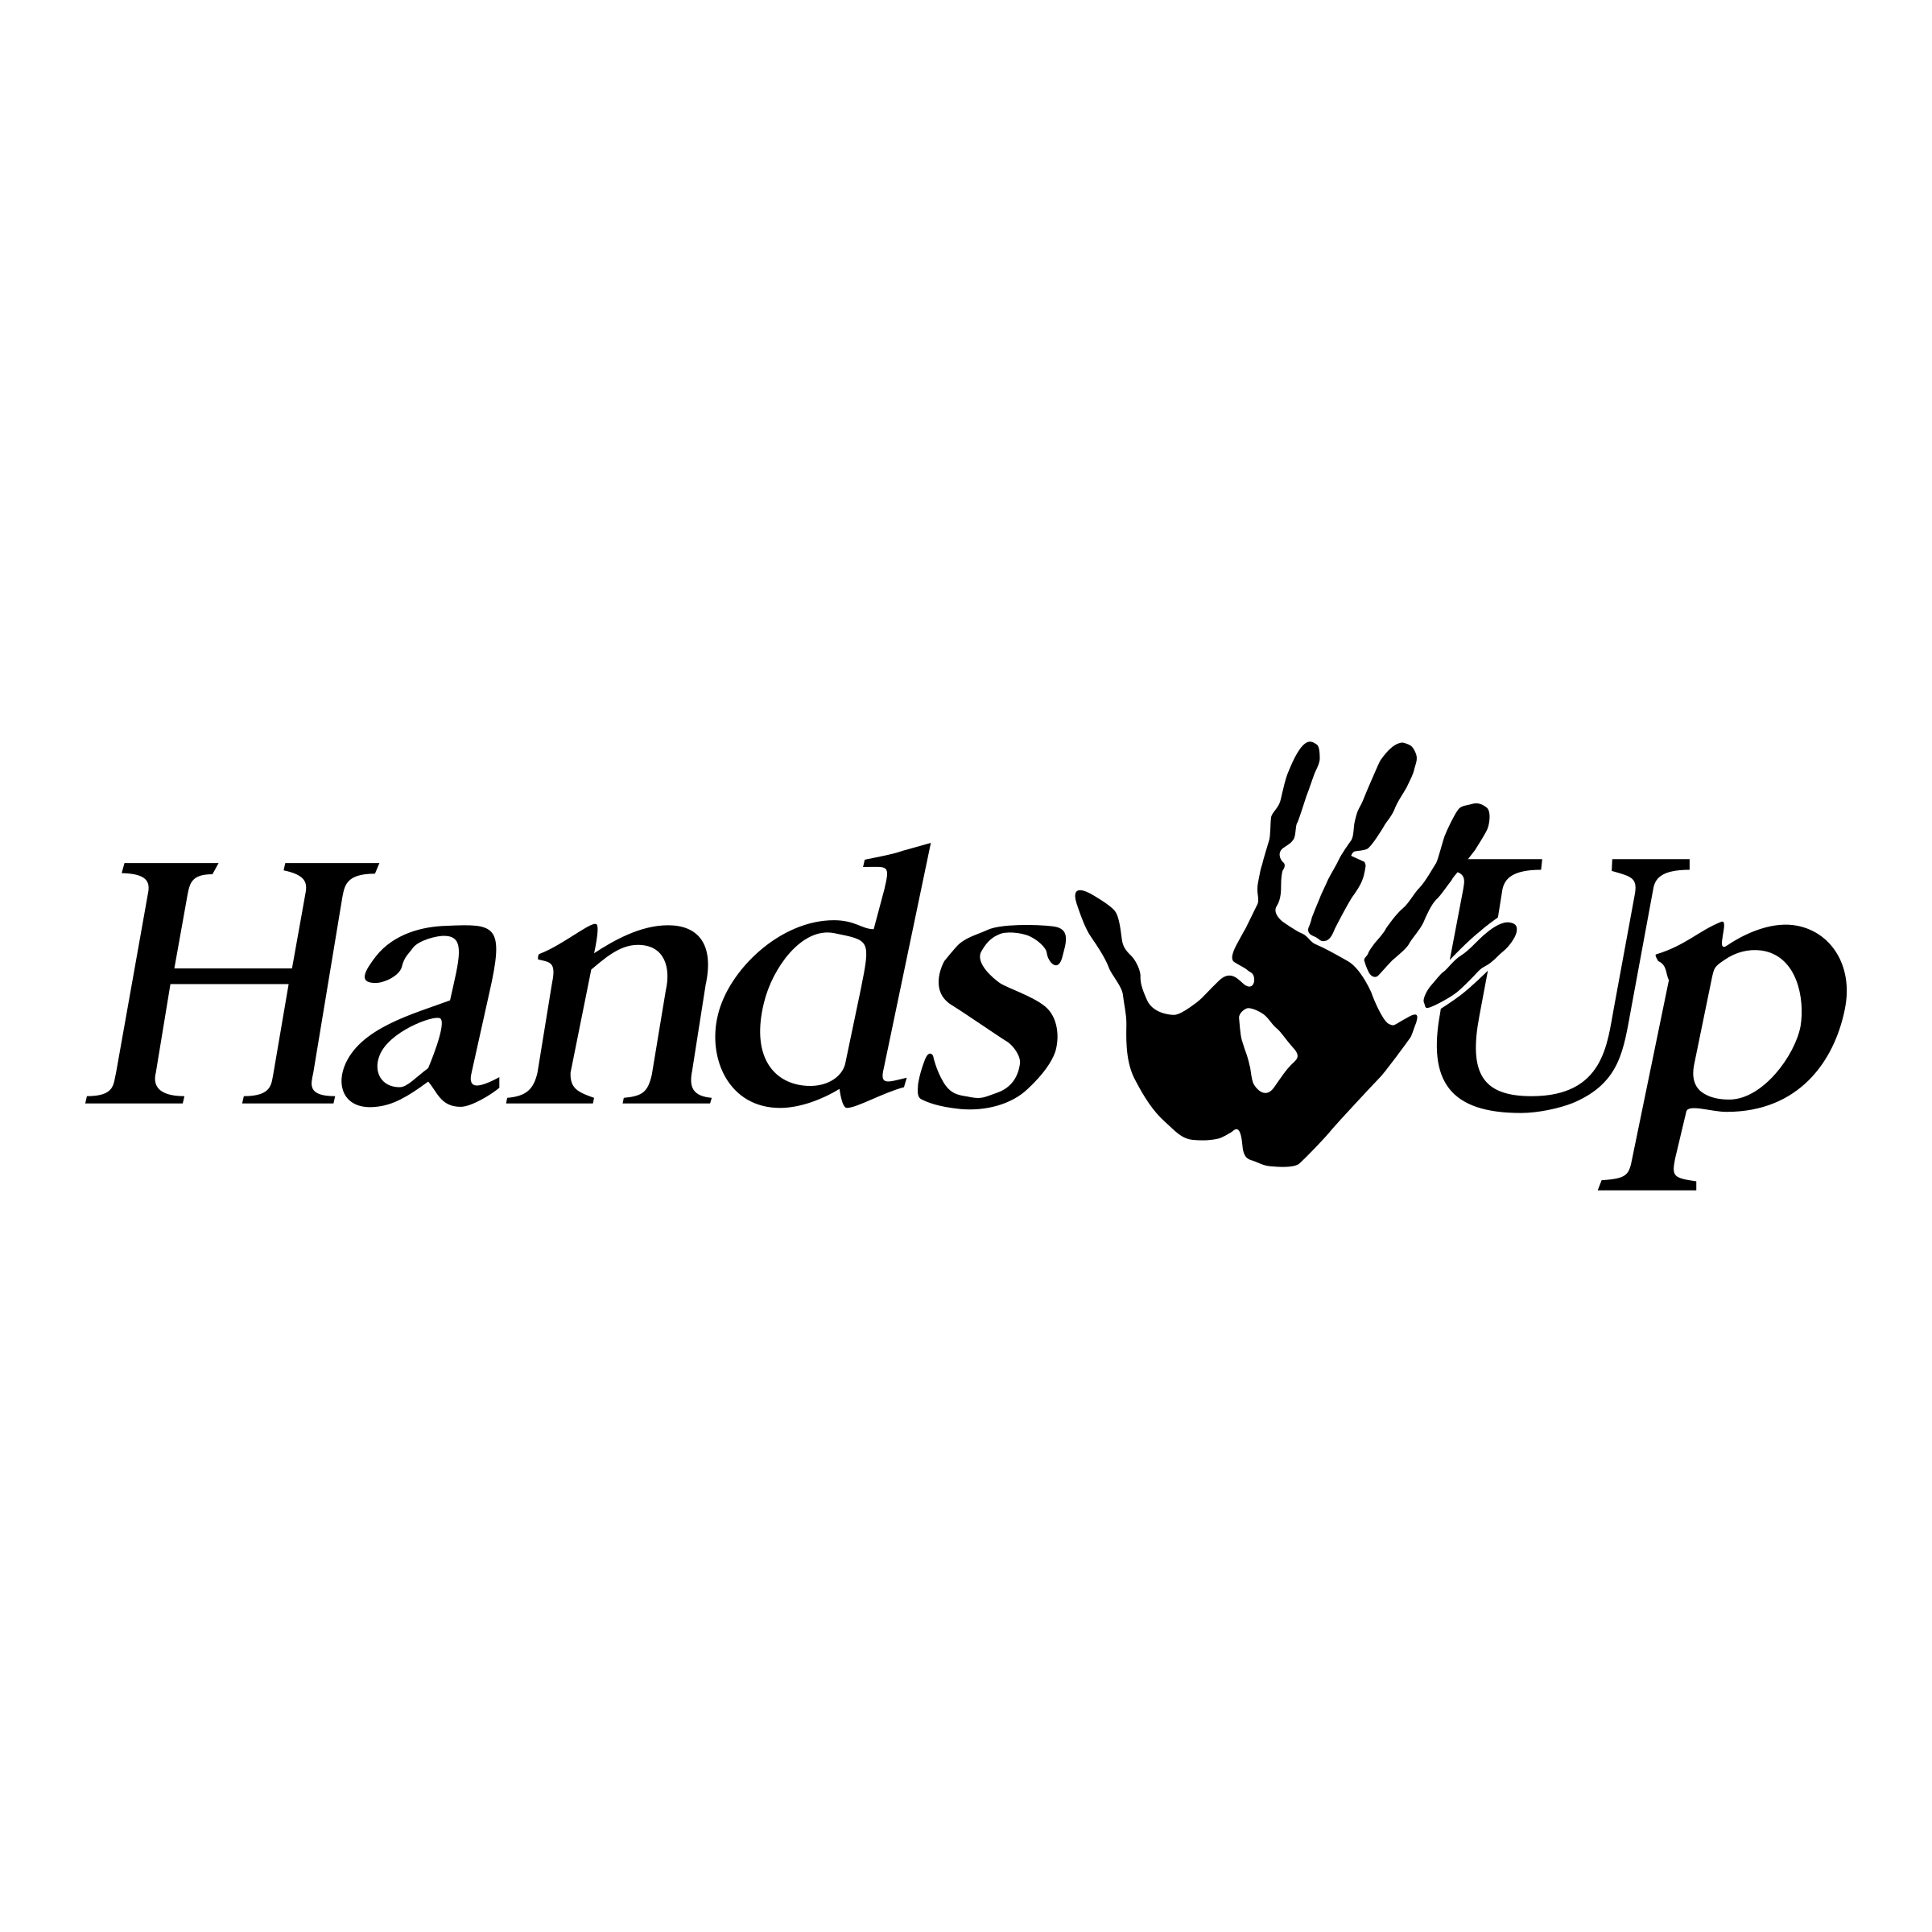 HandsUp Logo - Hands Up Logo PNG Transparent & SVG Vector